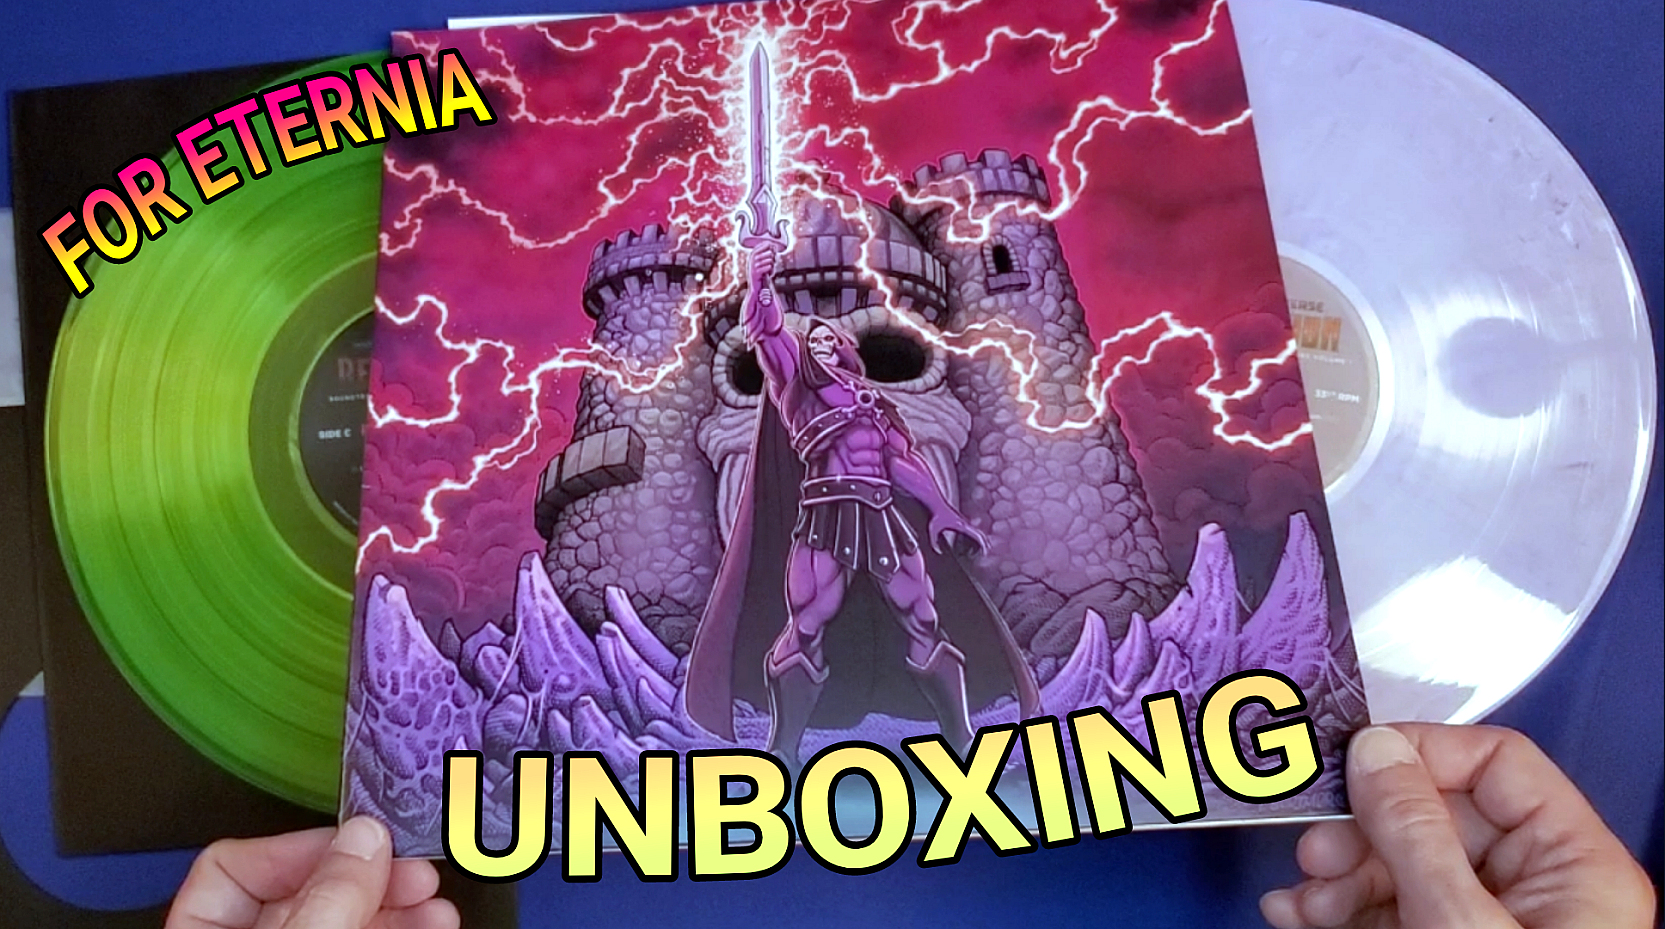 Unboxing the Mondo ”Masters of the Universe: Revelation” Original Series Soundtrack Double LP Volume One